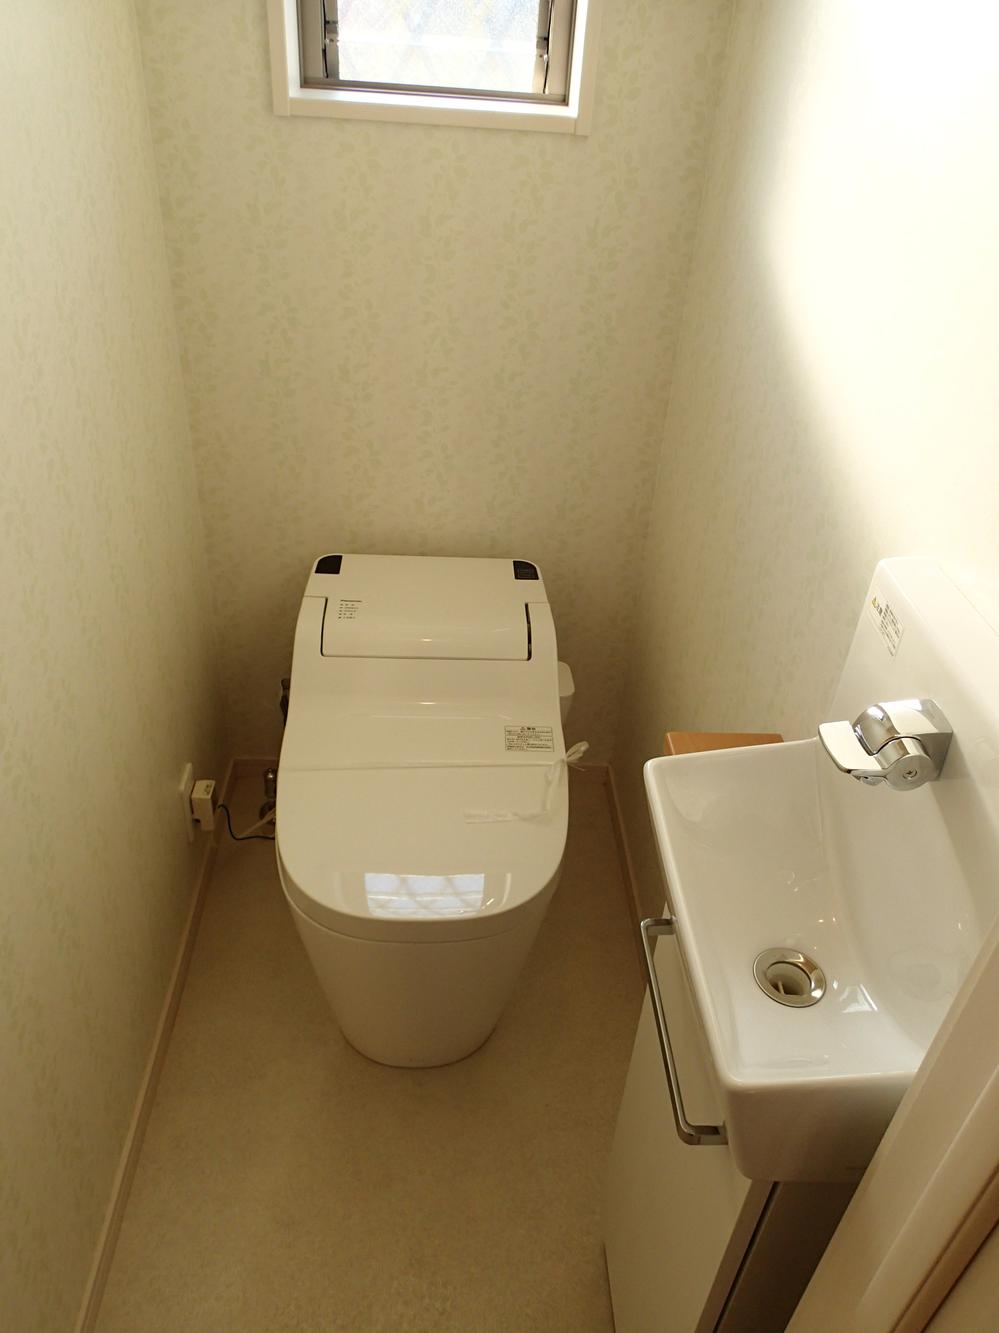 Toilet. Indoor (12 May 2012) shooting Panasonic: La Uno